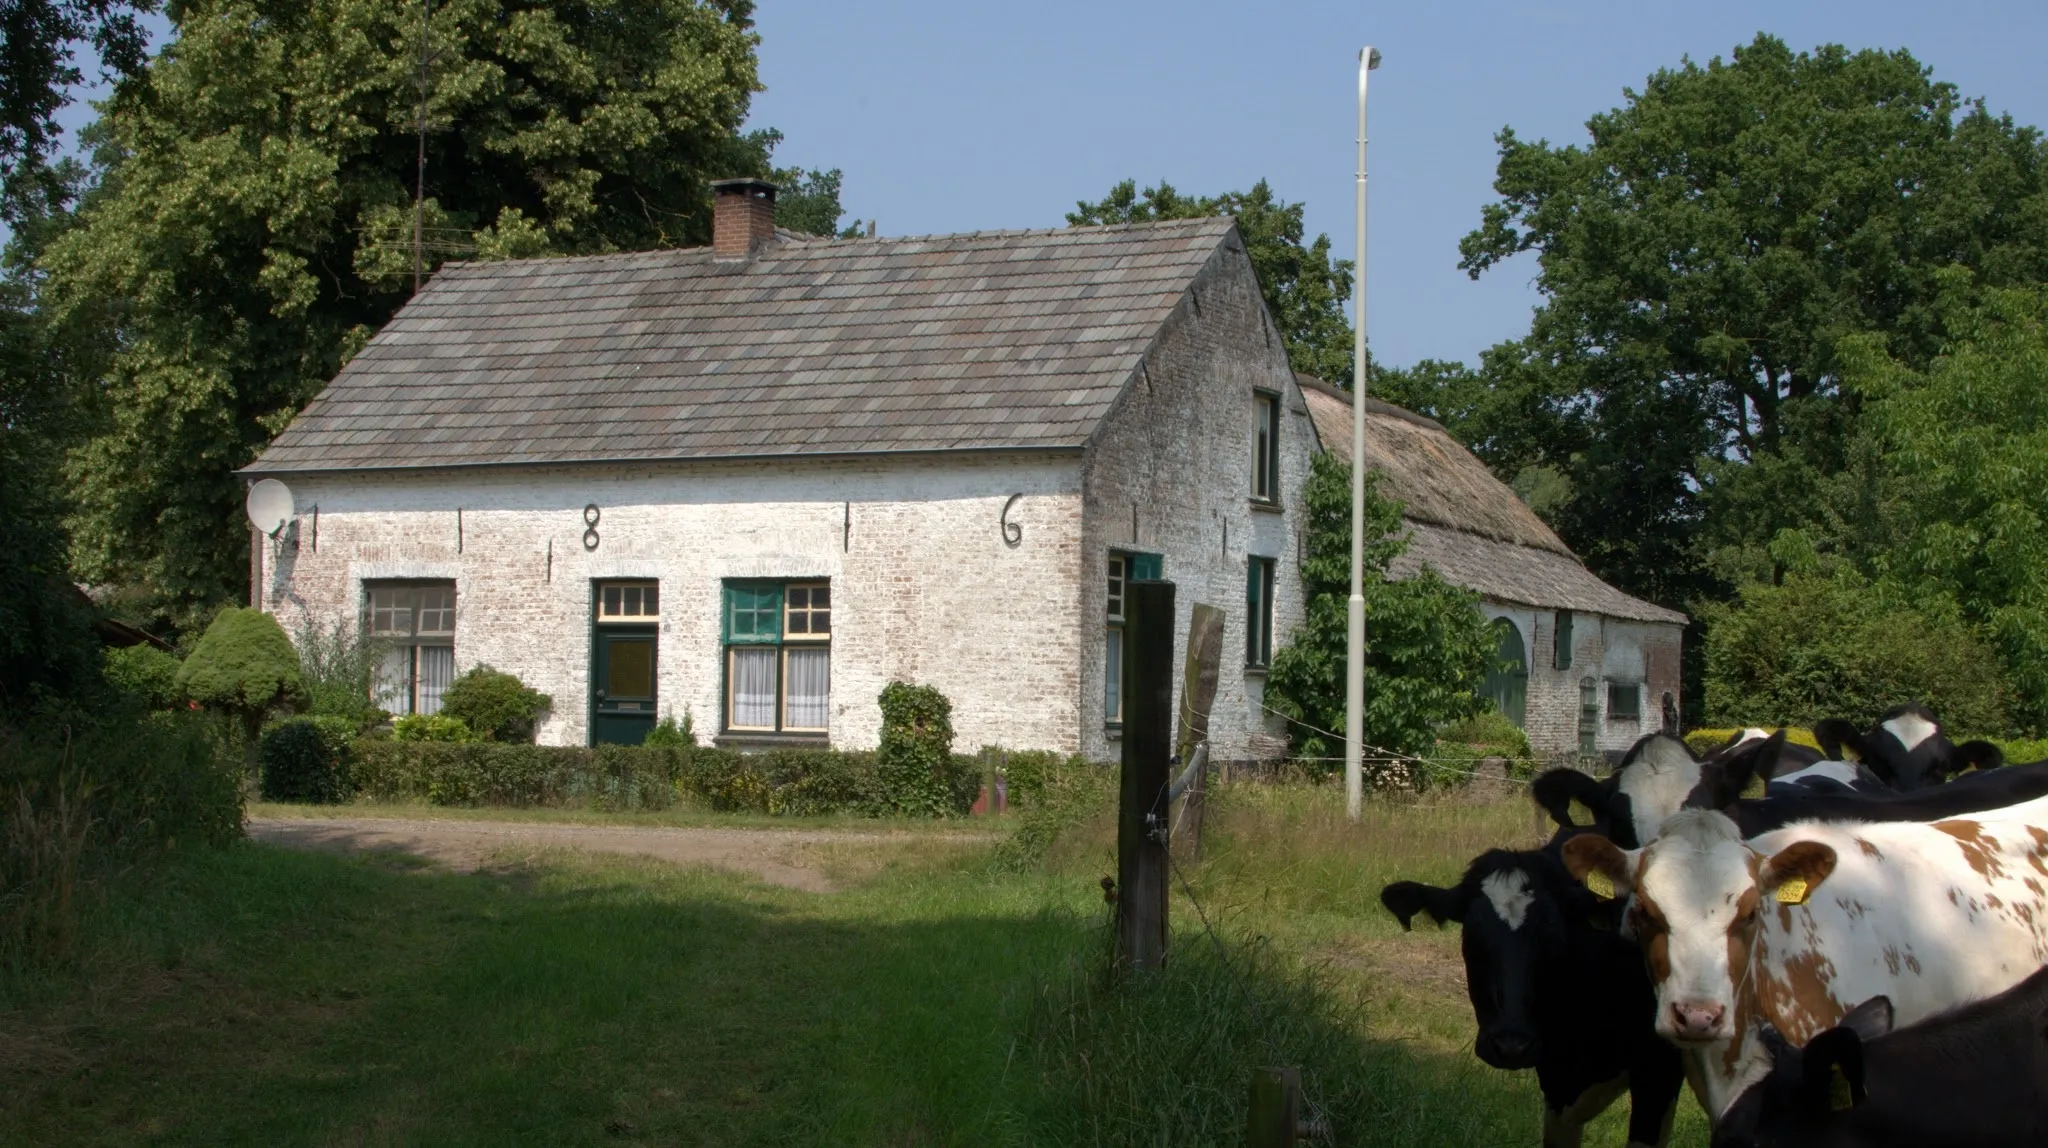 Photo showing: 130713 HAZELDONKSEWG  LIESSEL DEURNE  gehucht (hamlet) de VORST boerderij (farmhouse) anno 1816